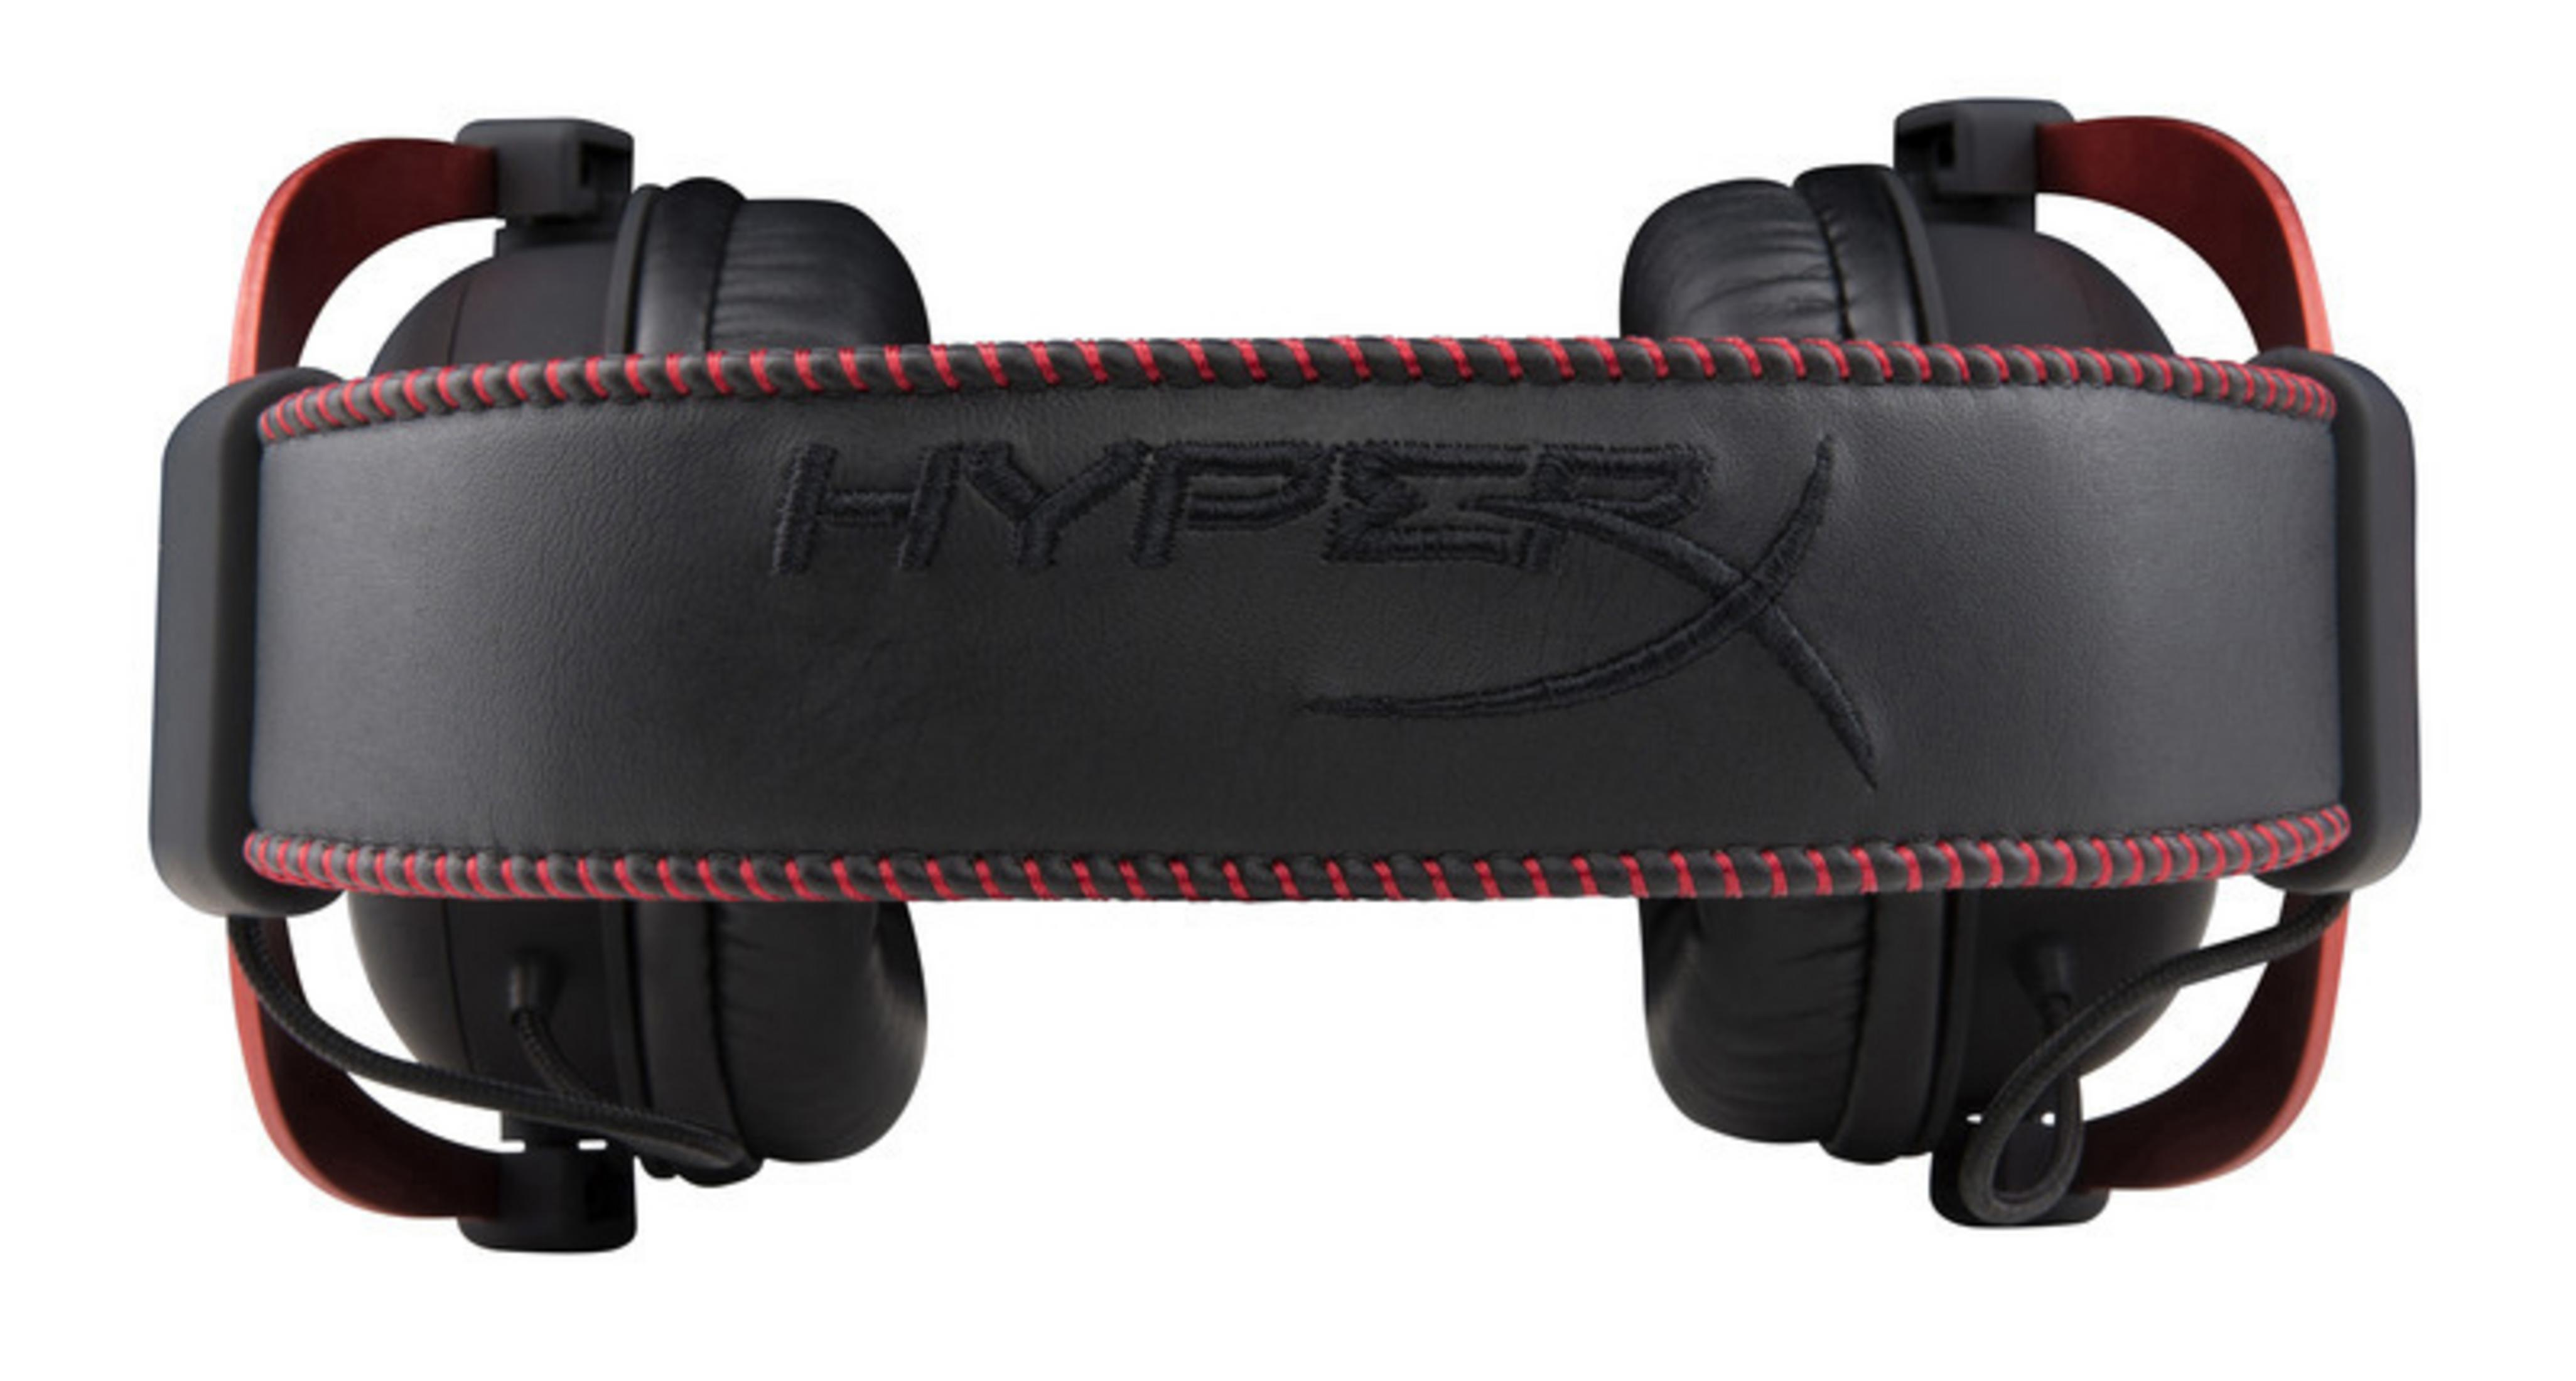 HYPERX KHX-HSCP-RD, On-ear Headset Gaming Schwarz/Rot